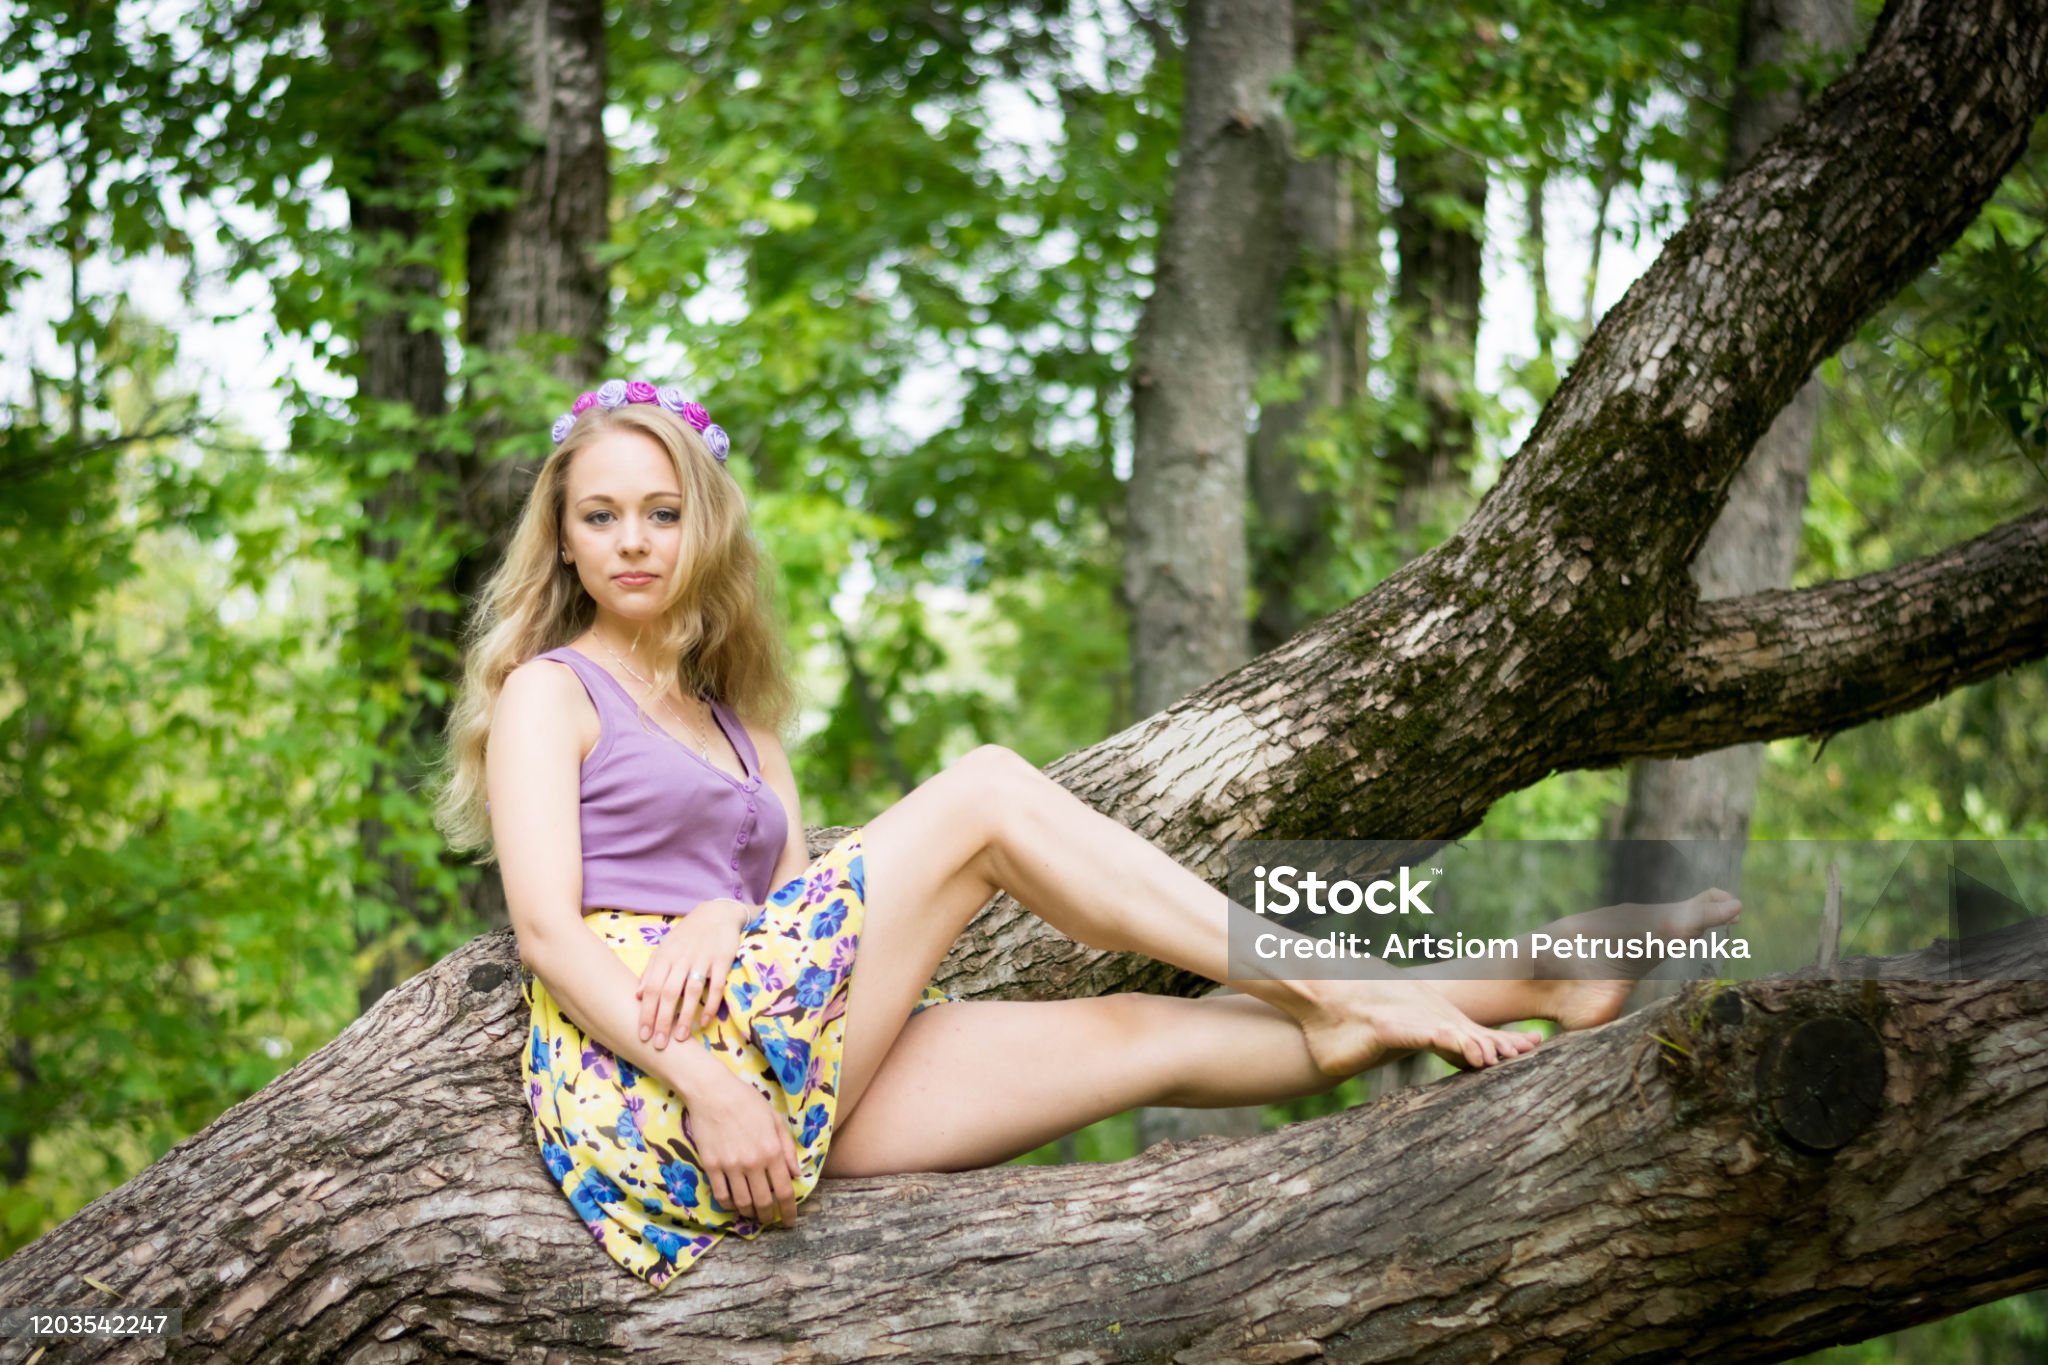 https://media.istockphoto.com/id/1203542247/photo/girl-with-beautiful-legs-sitting-on-a-tree.jpg?s=2048x2048&amp;w=is&amp;k=20&amp;c=zCpyi-L8hE3BmRqsFdNqzoI4lTHqbJFABB1Q14vreVs=